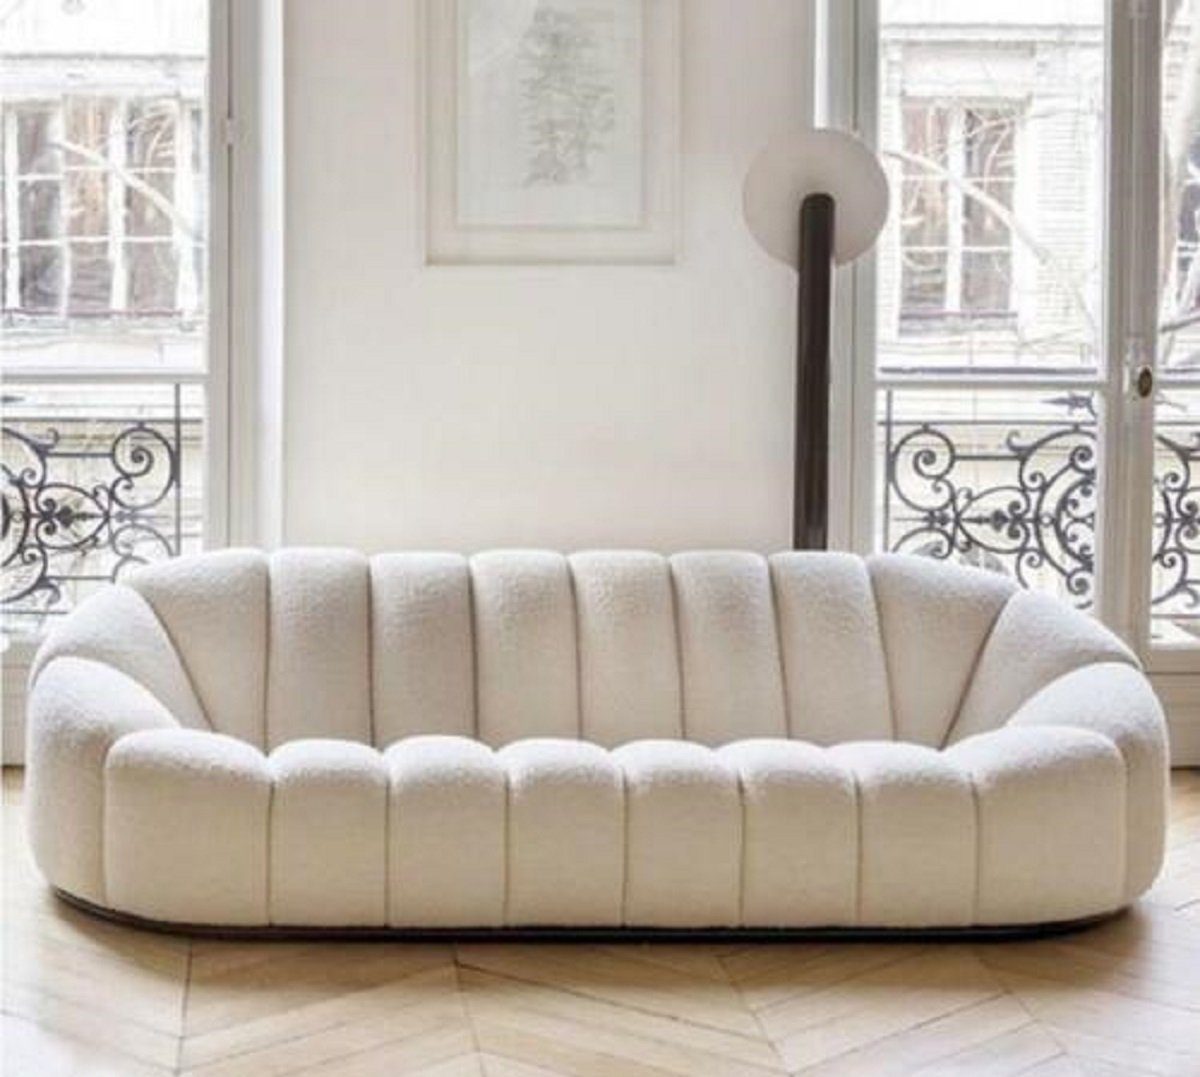 JVmoebel Sofa, Textil Sitzer Dreisitzer Relax Möbel Neu Design 3 Lounge Sitz Sofa